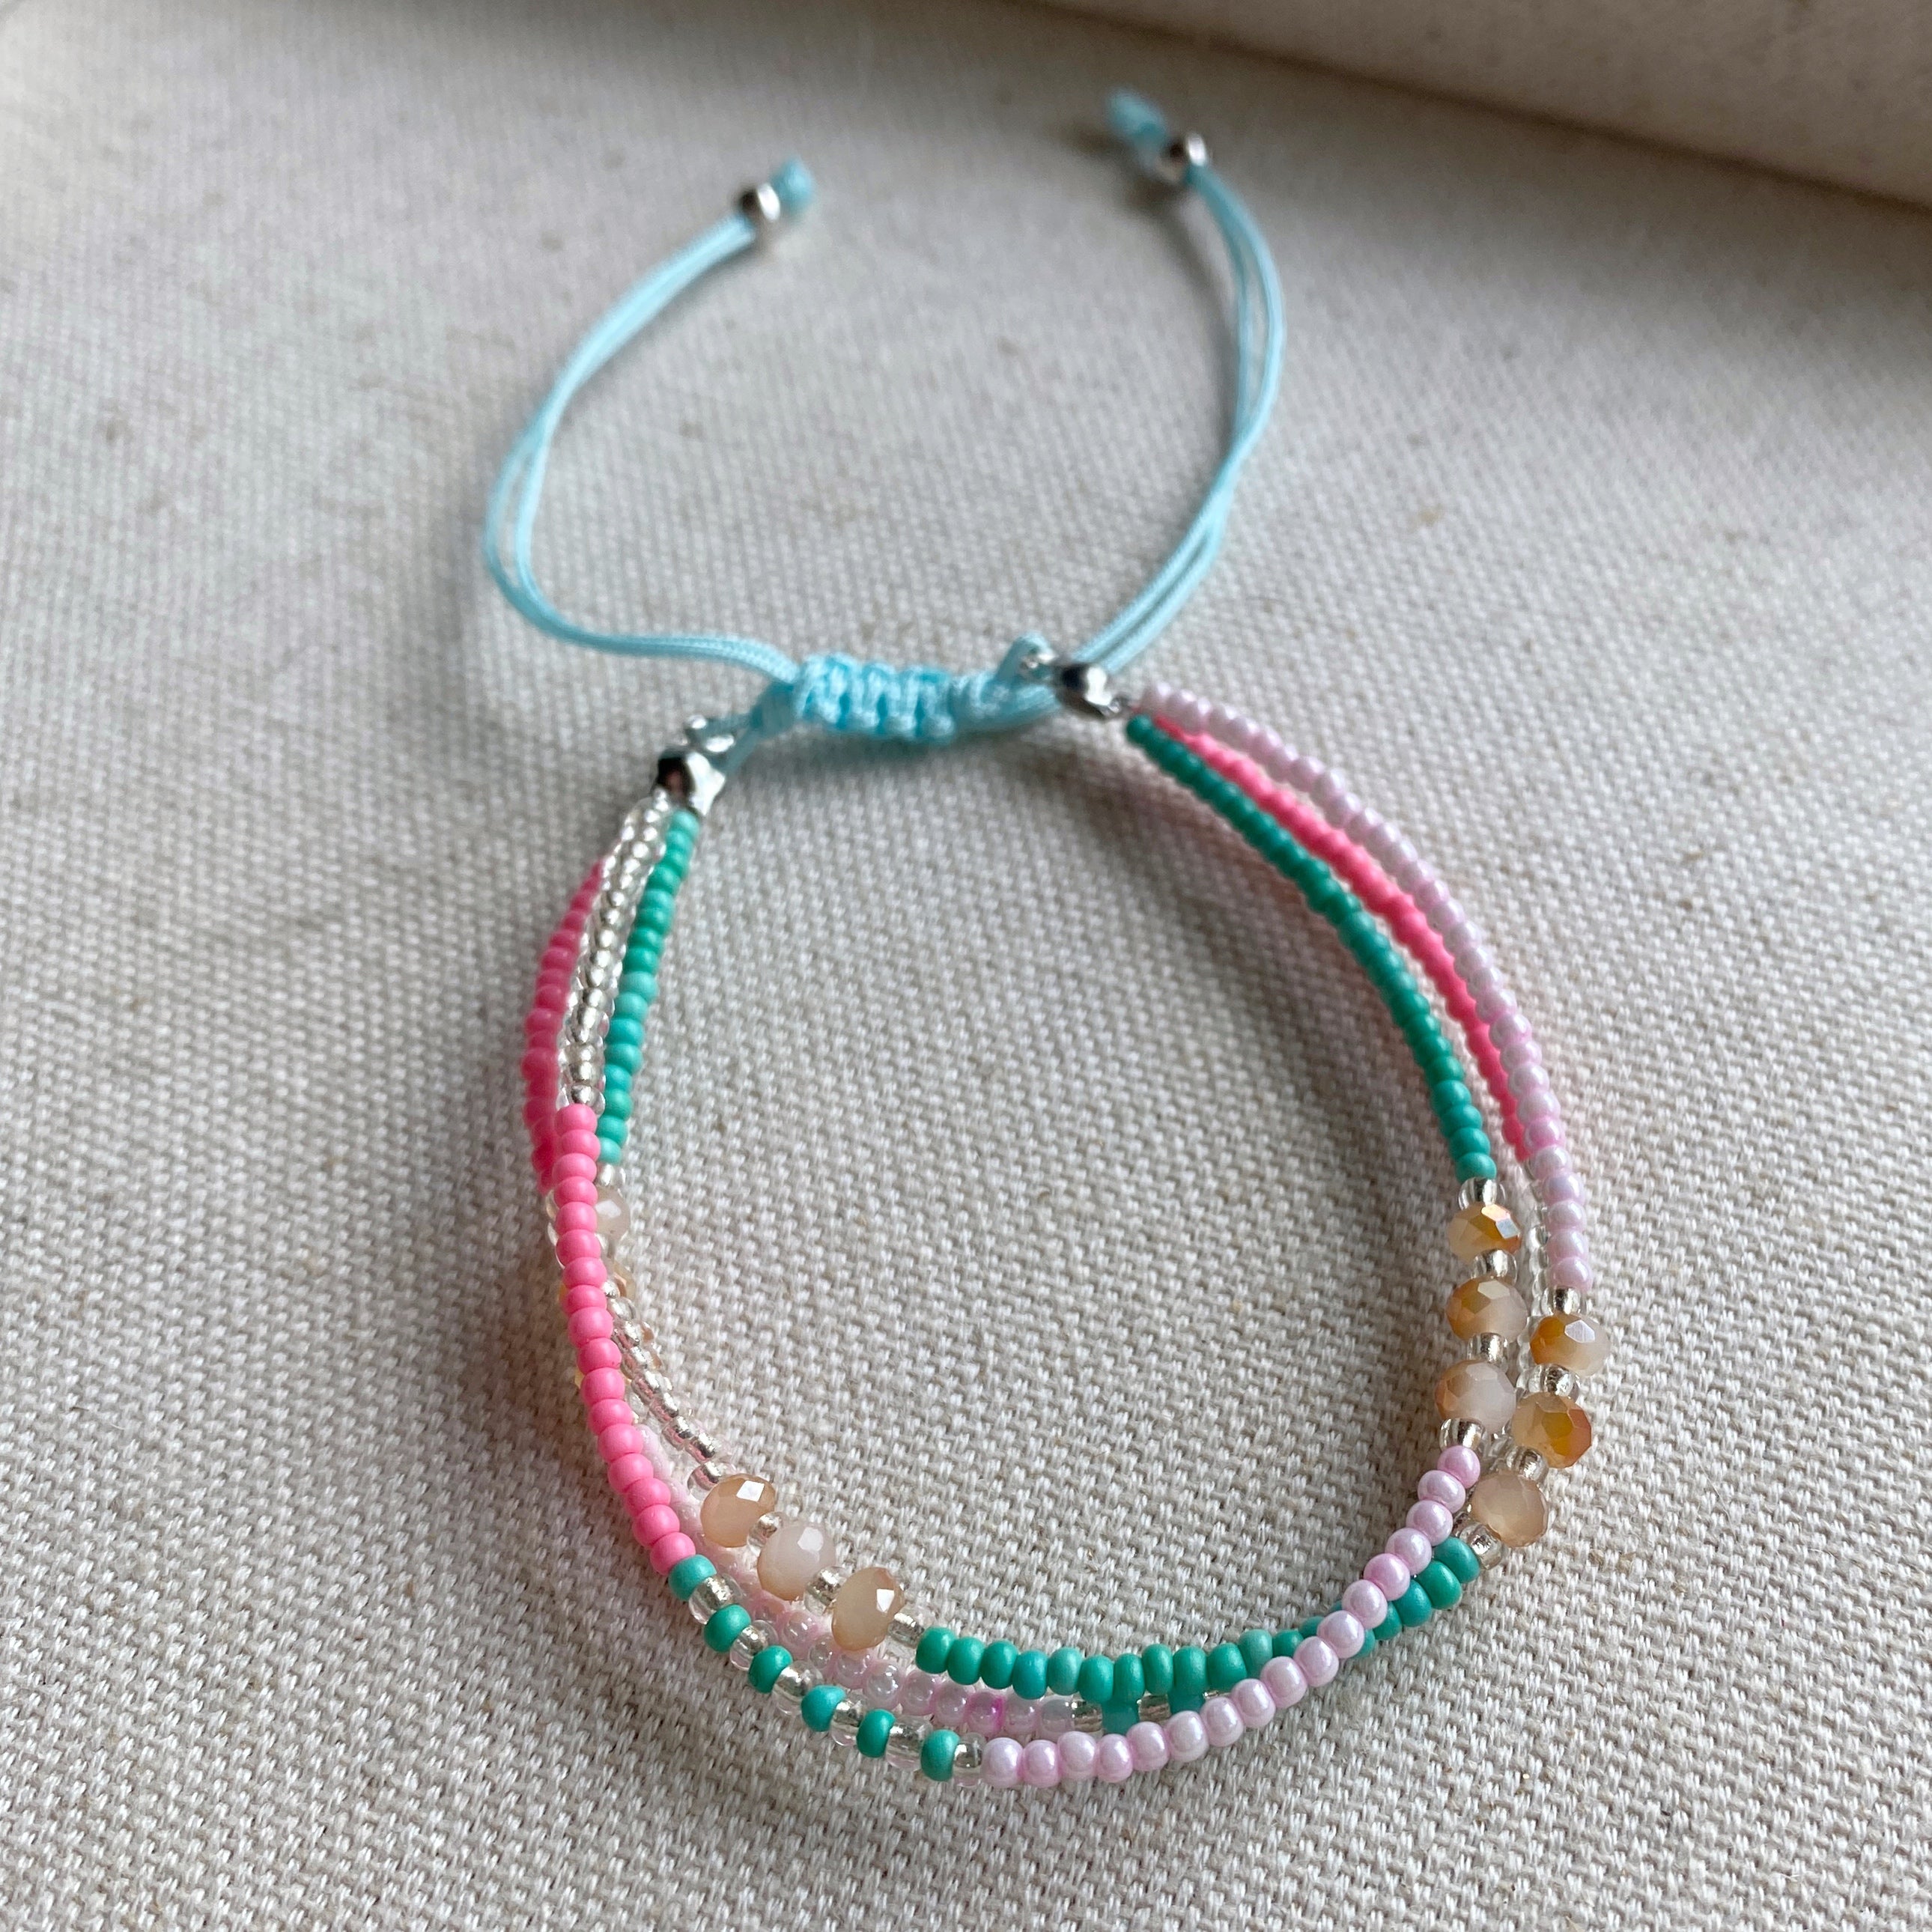 How to Make 3-strand Braided Friendship Bracelet out of String | Diy friendship  bracelets patterns, Etsy bracelets, Braided friendship bracelets